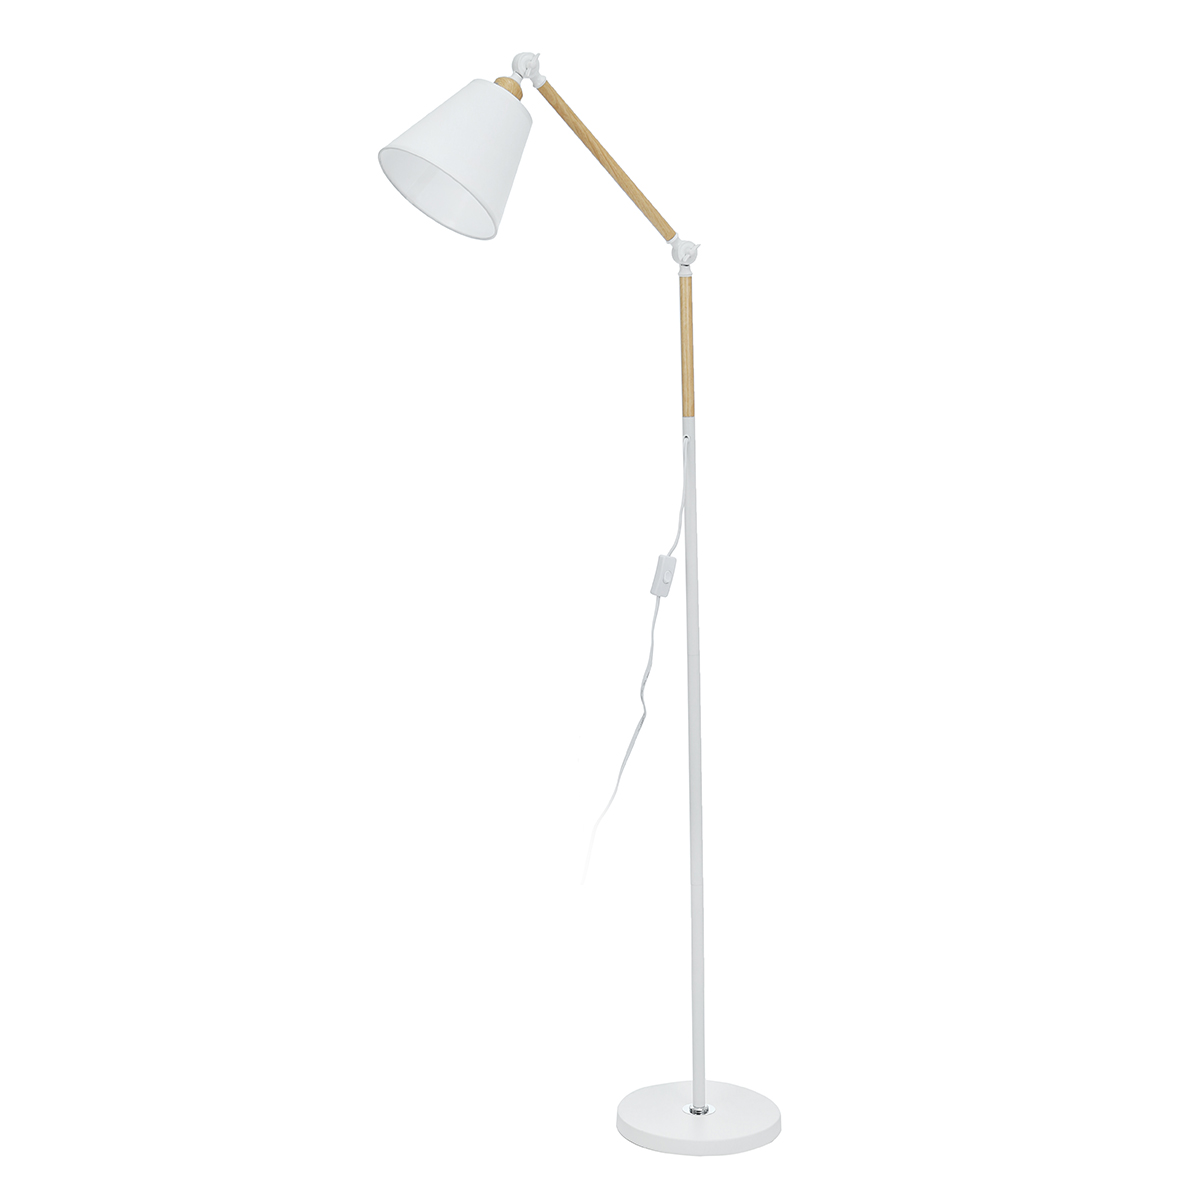 Find 85V~265V Modern Floor Light Wooden Iron Hanging Lamp For Shop Restaurant Bar for Sale on Gipsybee.com with cryptocurrencies